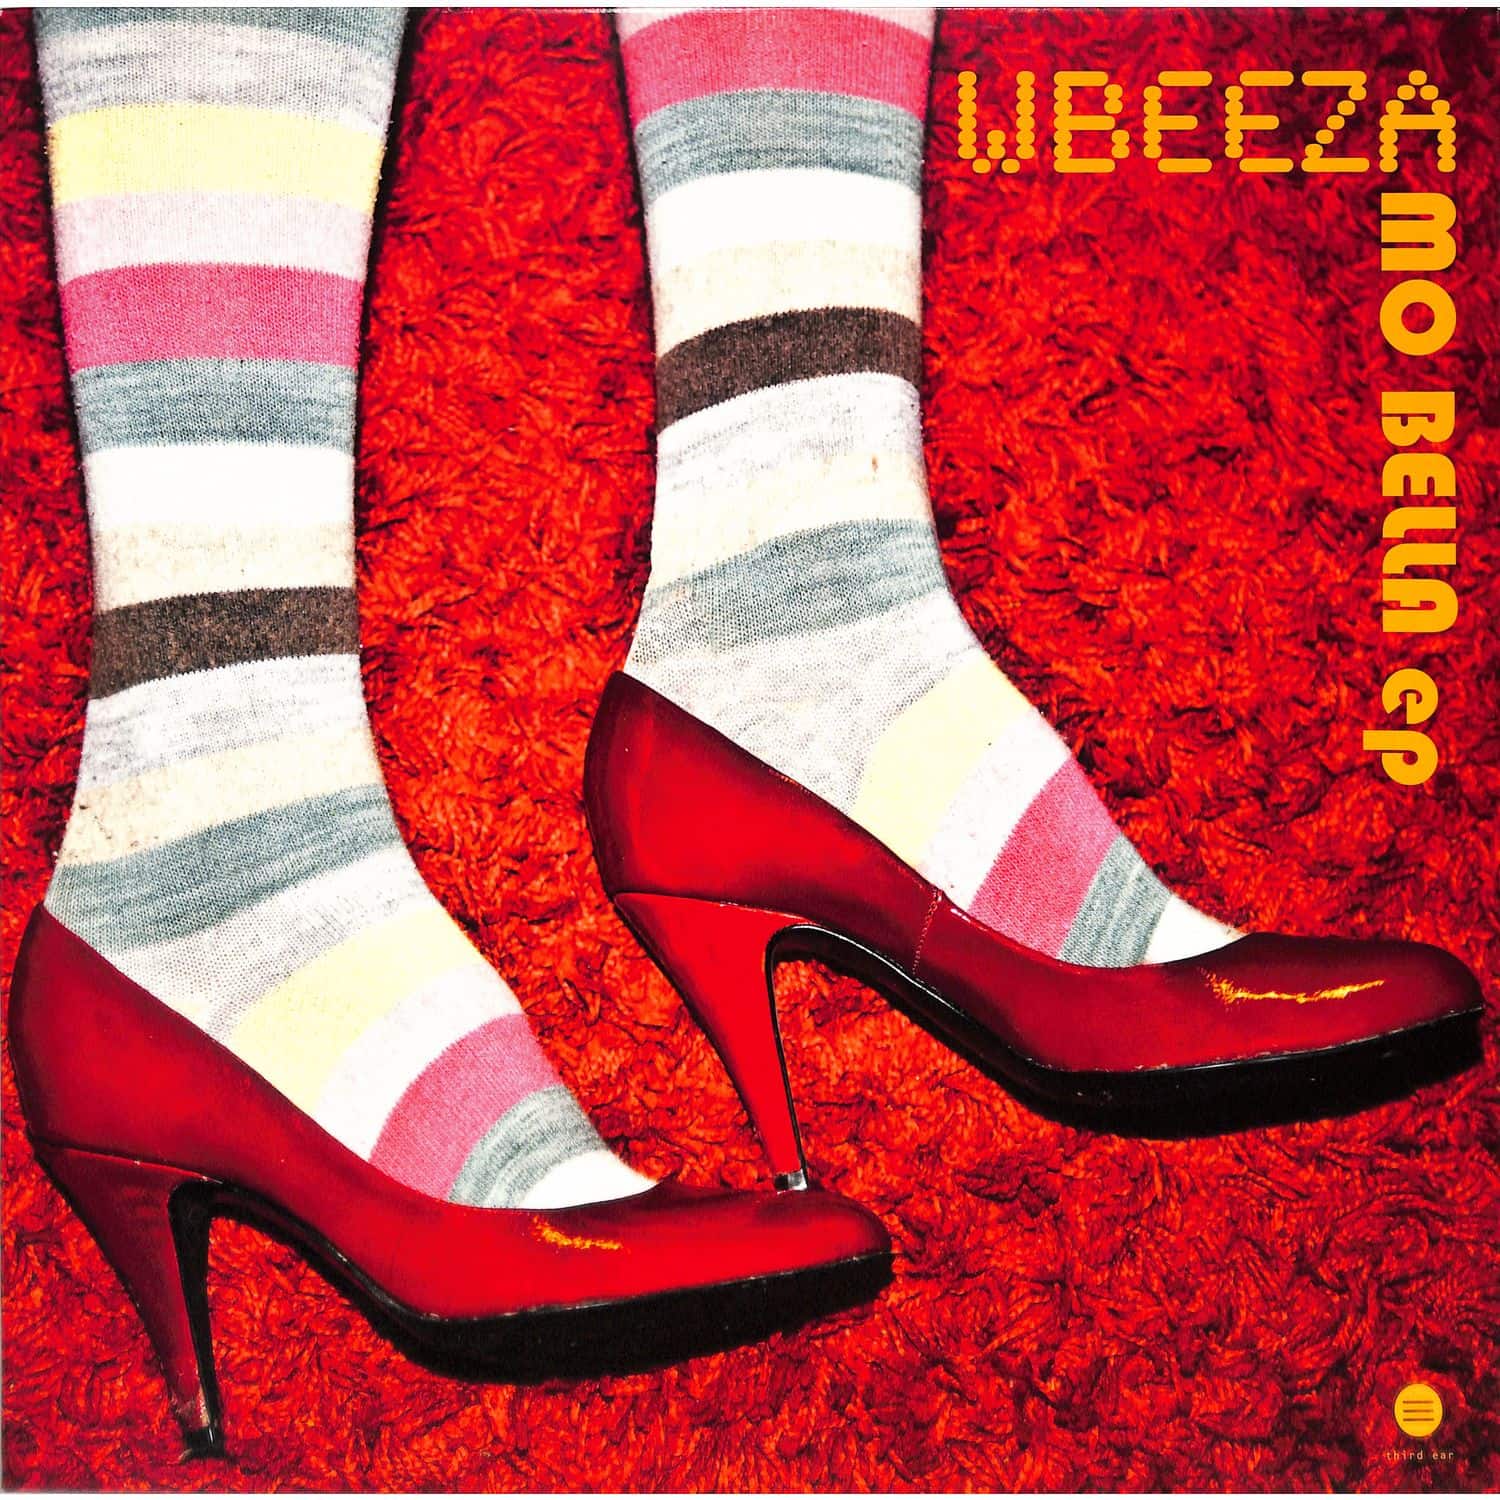 Wbeeza - MO BELLA EP